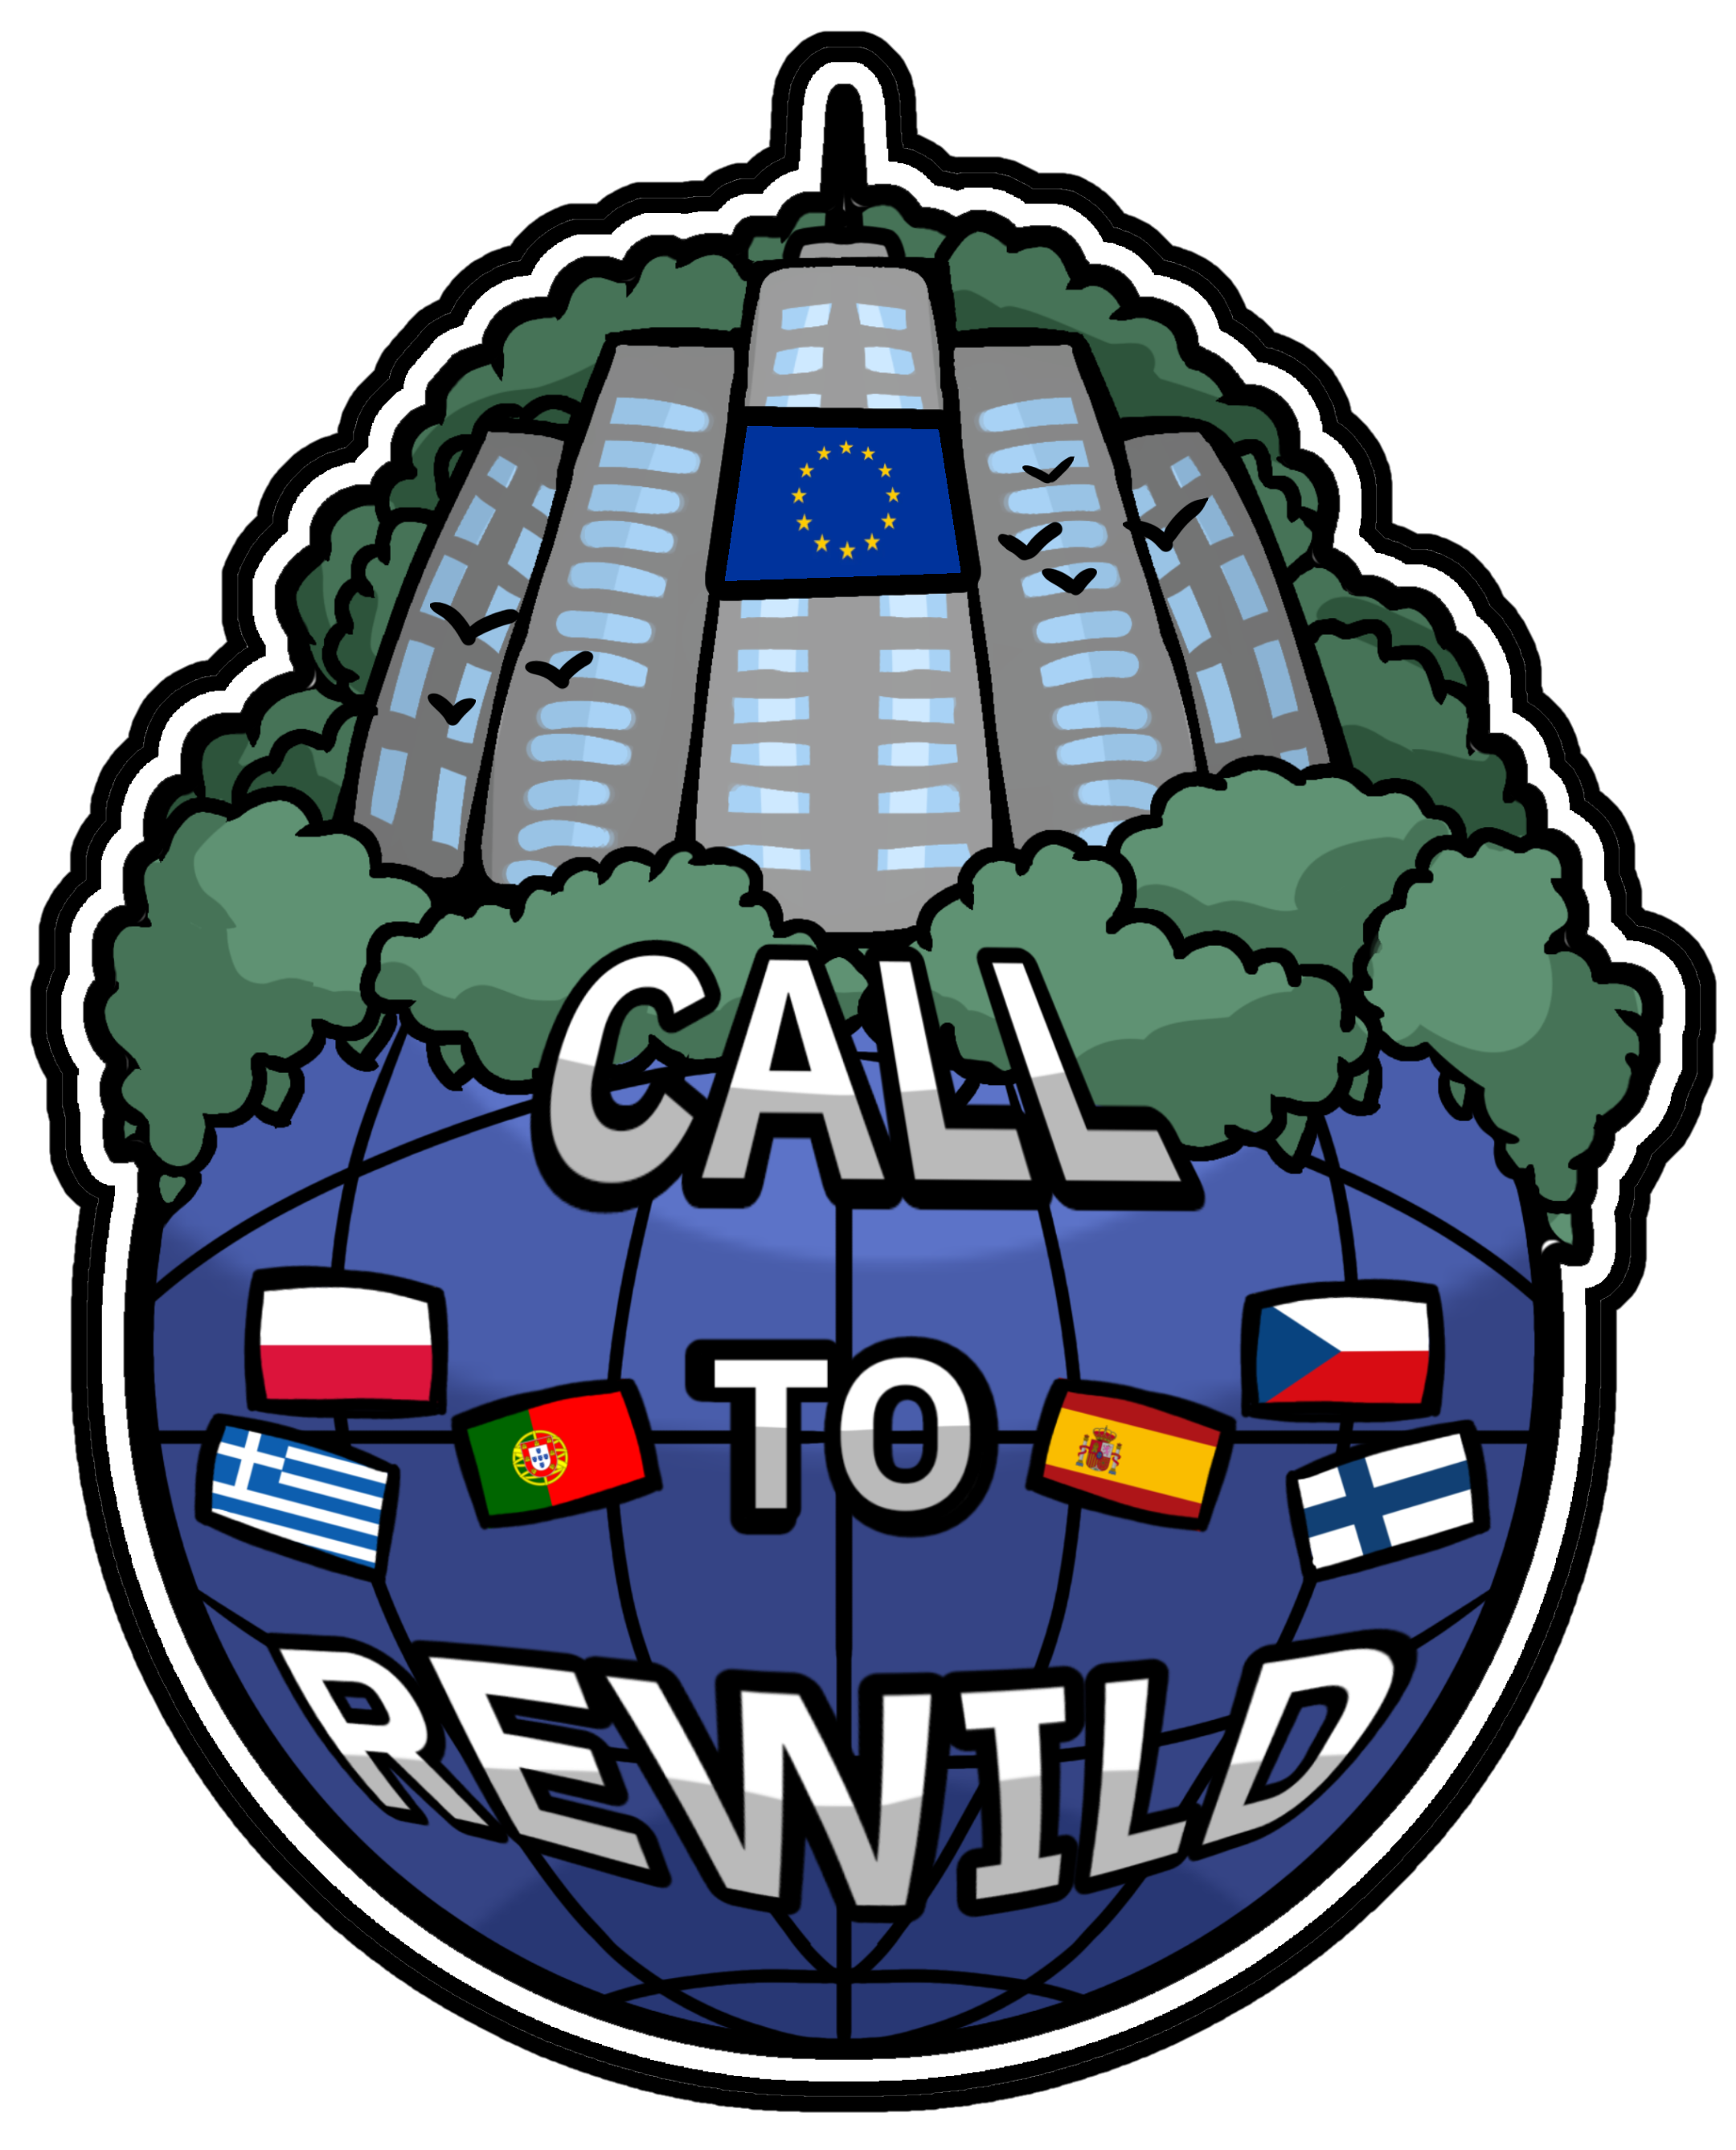 Erasmus+-Call To Rewild